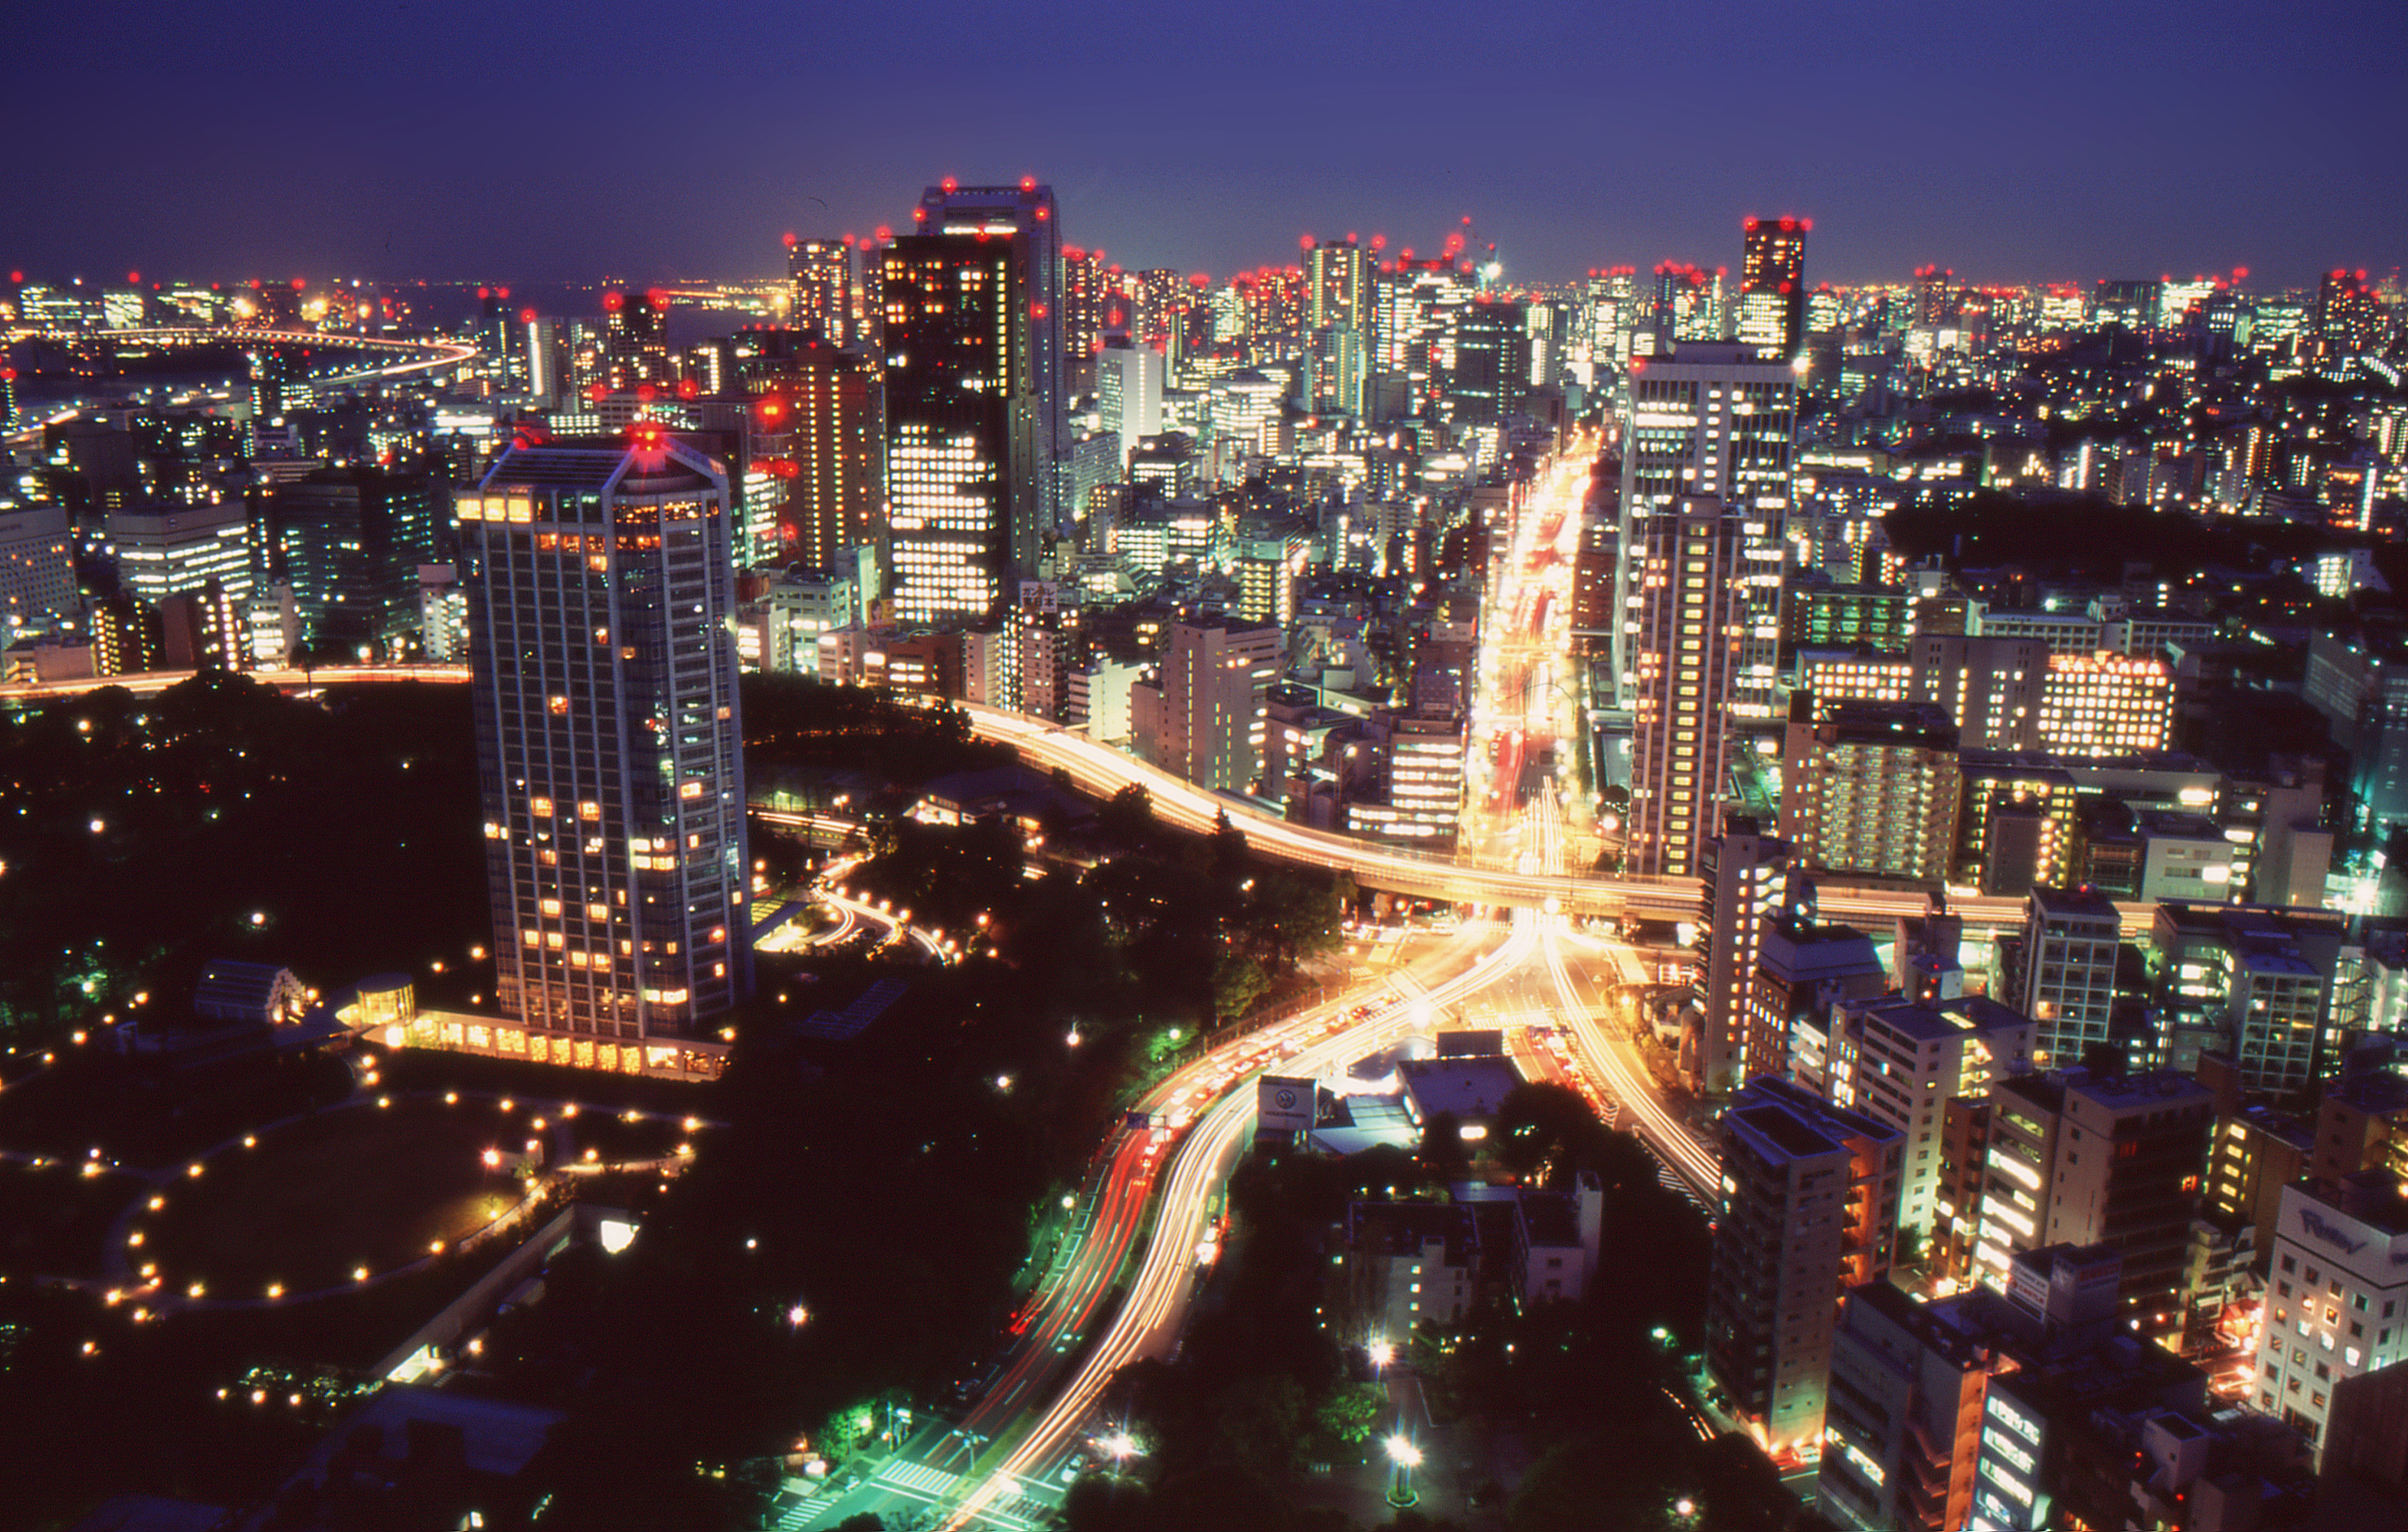 https://upload.wikimedia.org/wikipedia/commons/d/d4/Tokyo_by_night_2011.jpg